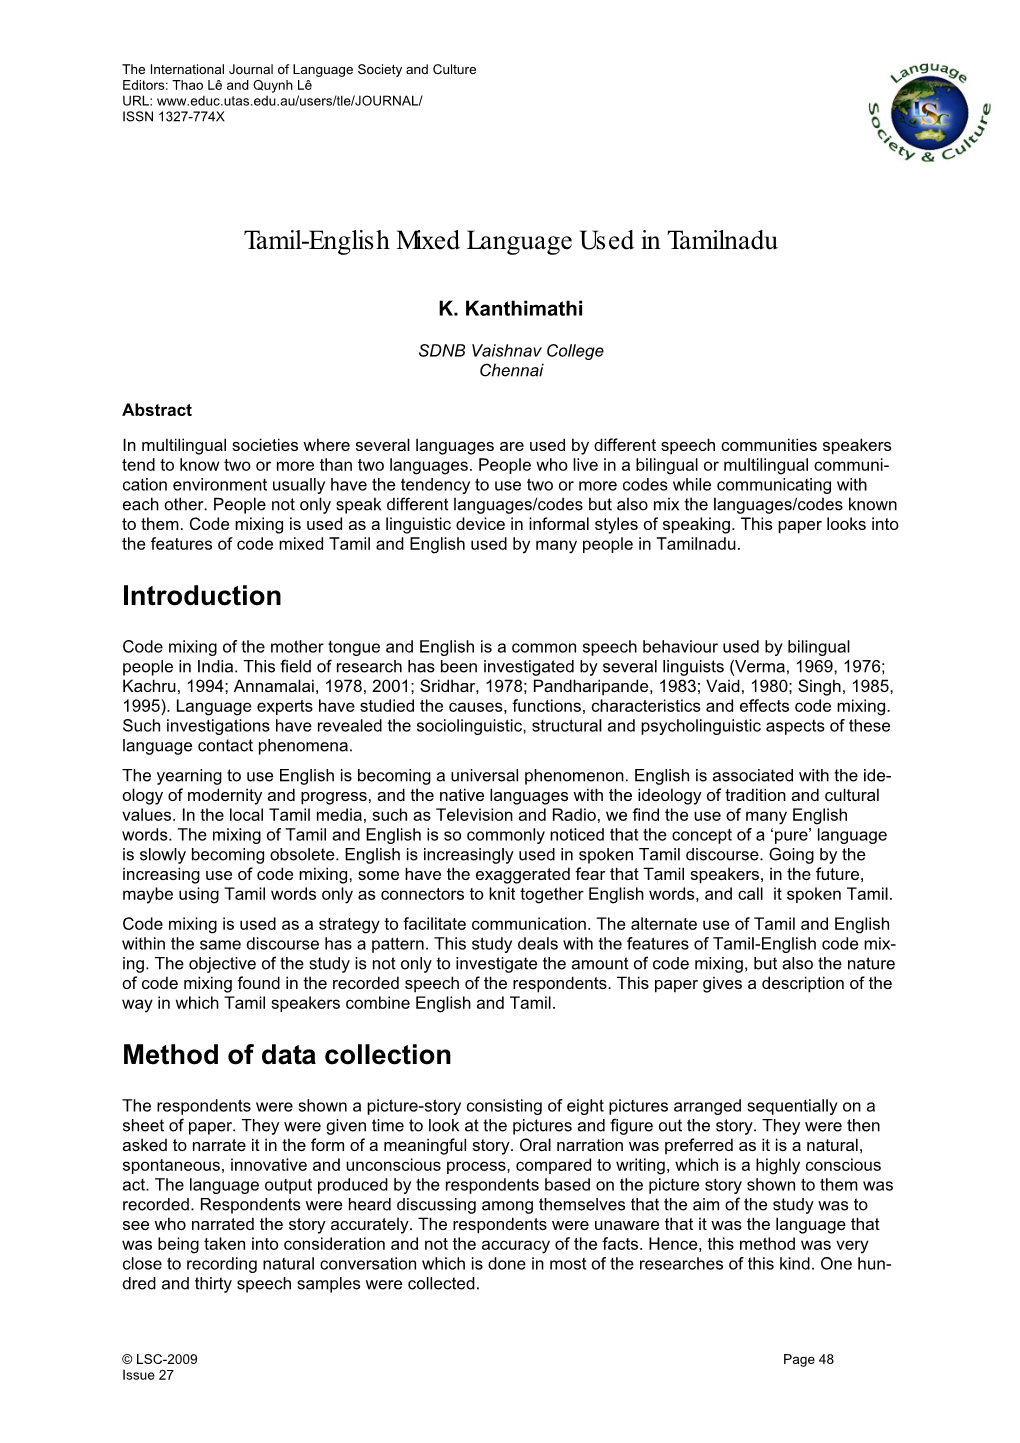 Tamil-English Mixed Language Used in Tamilnadu